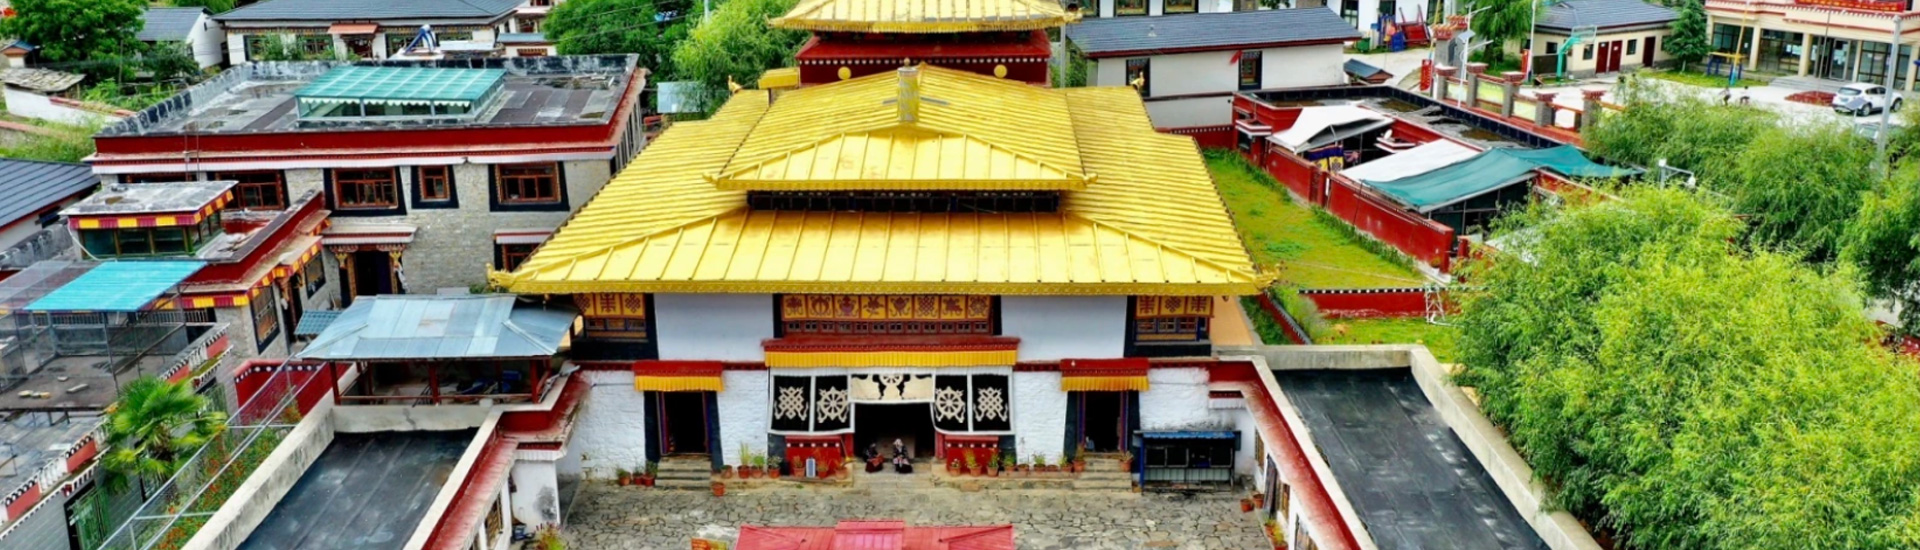 Buchu Monastery